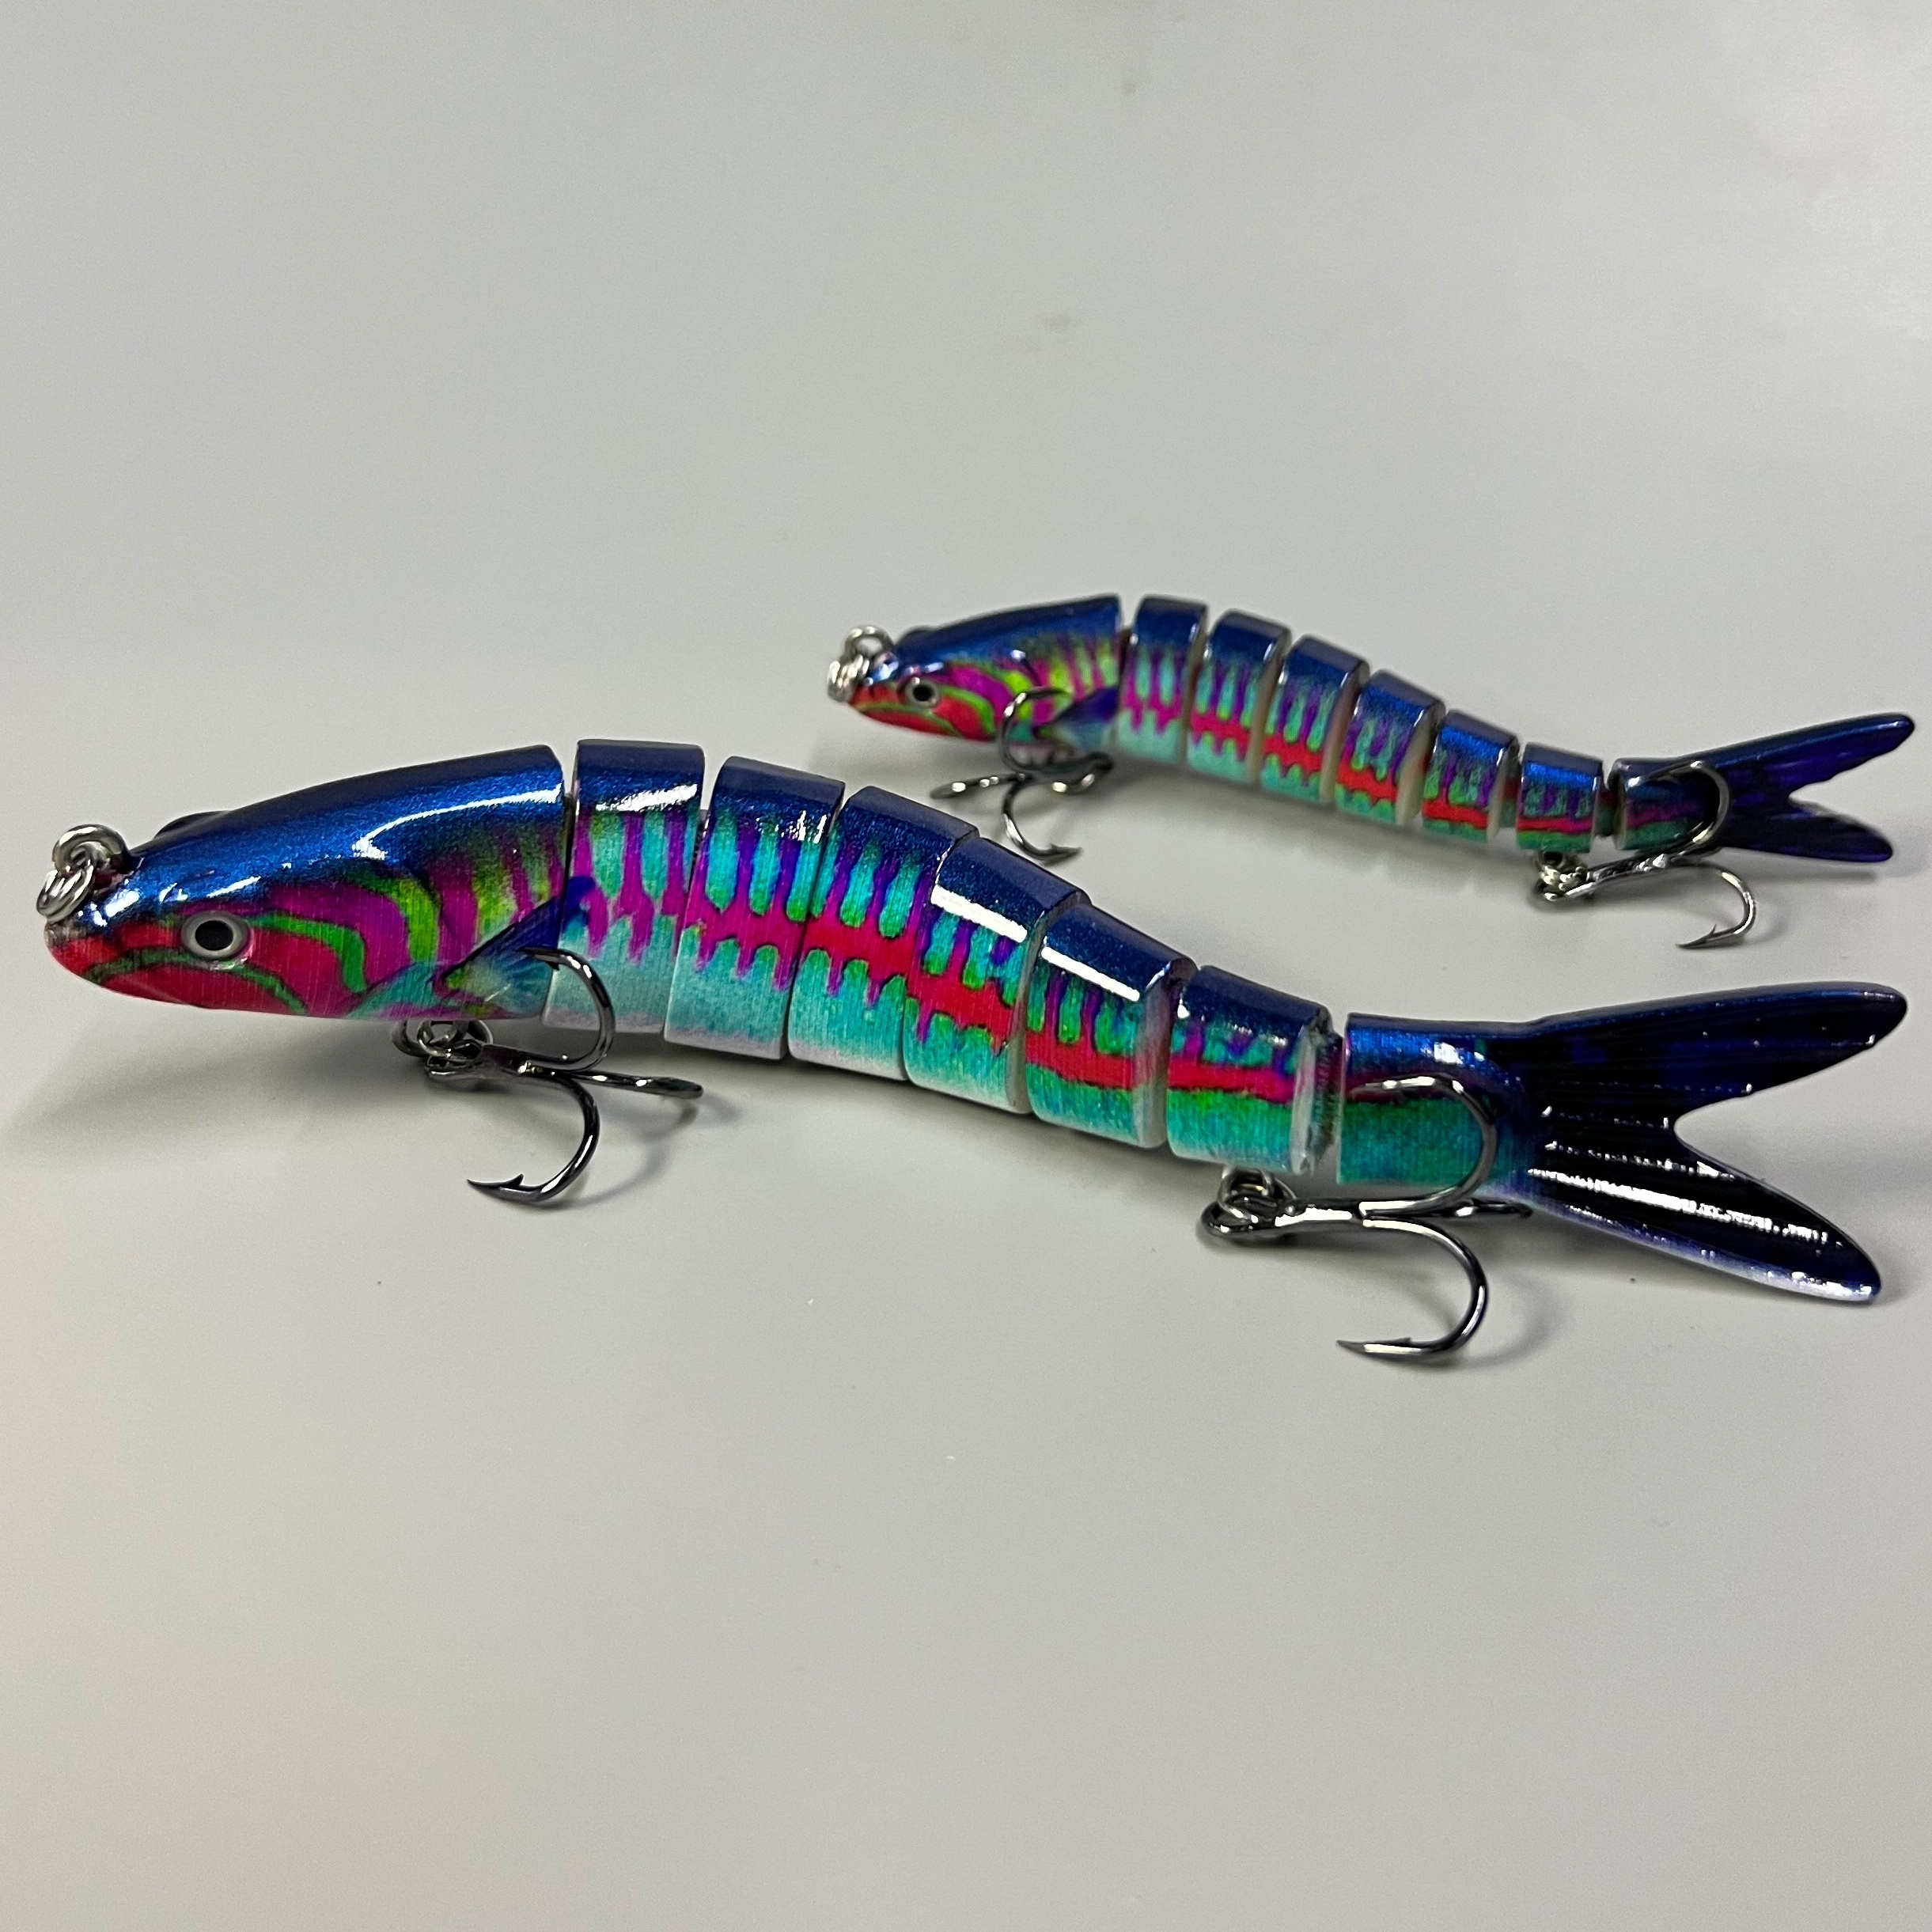 

1pc Colorful Artificial Multi Sections Fishing Lure, 8 Segment Bionic Wobbler Hard Bait, Fishing Gear, 11g/26g (0.39oz/0.92oz)